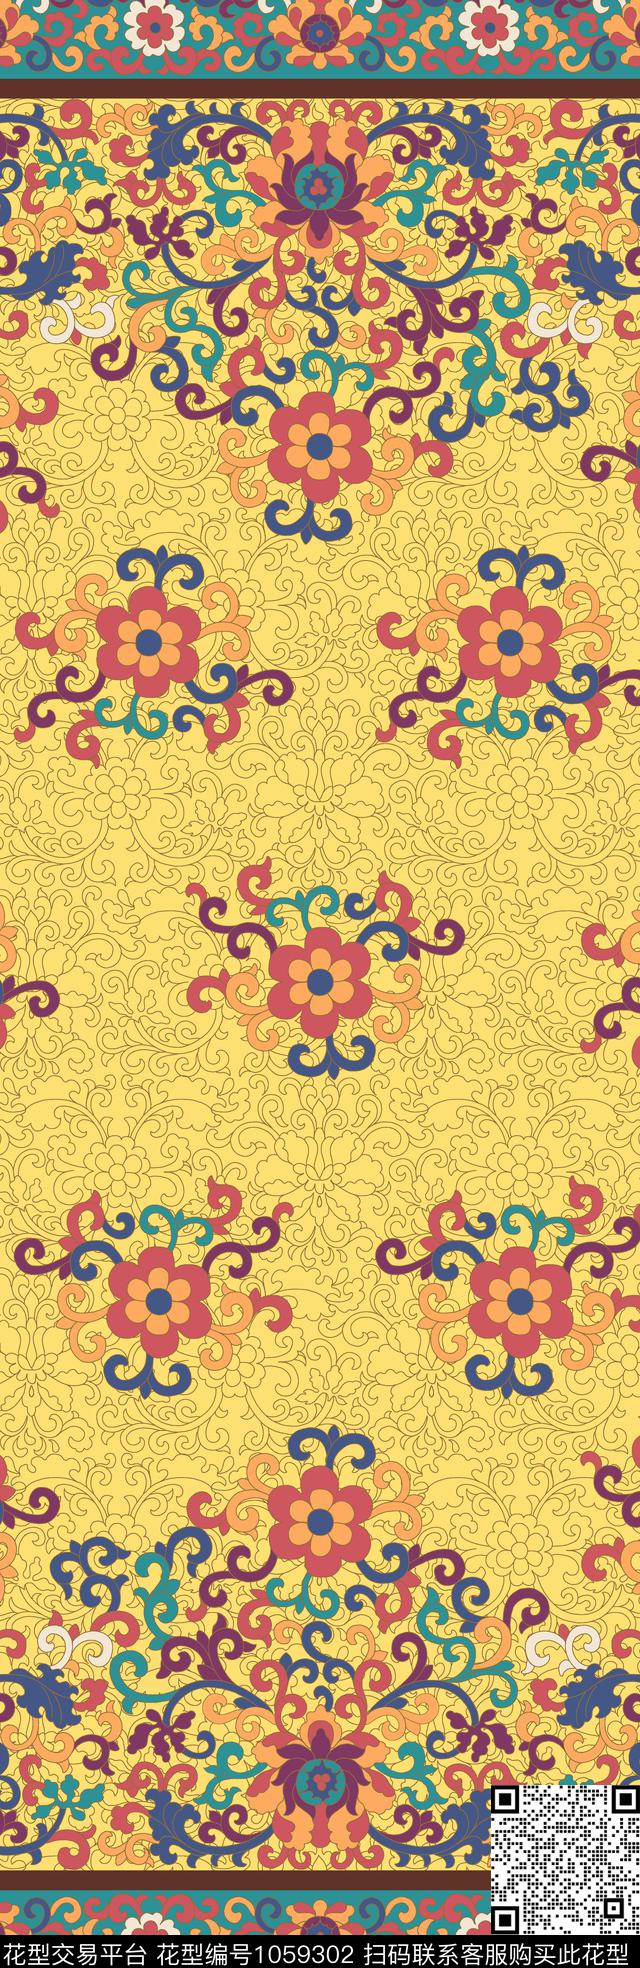 18wl05001-2.jpg - 1059302 - 中国 古典花纹 青花瓷 - 传统印花花型 － 长巾花型设计 － 瓦栏